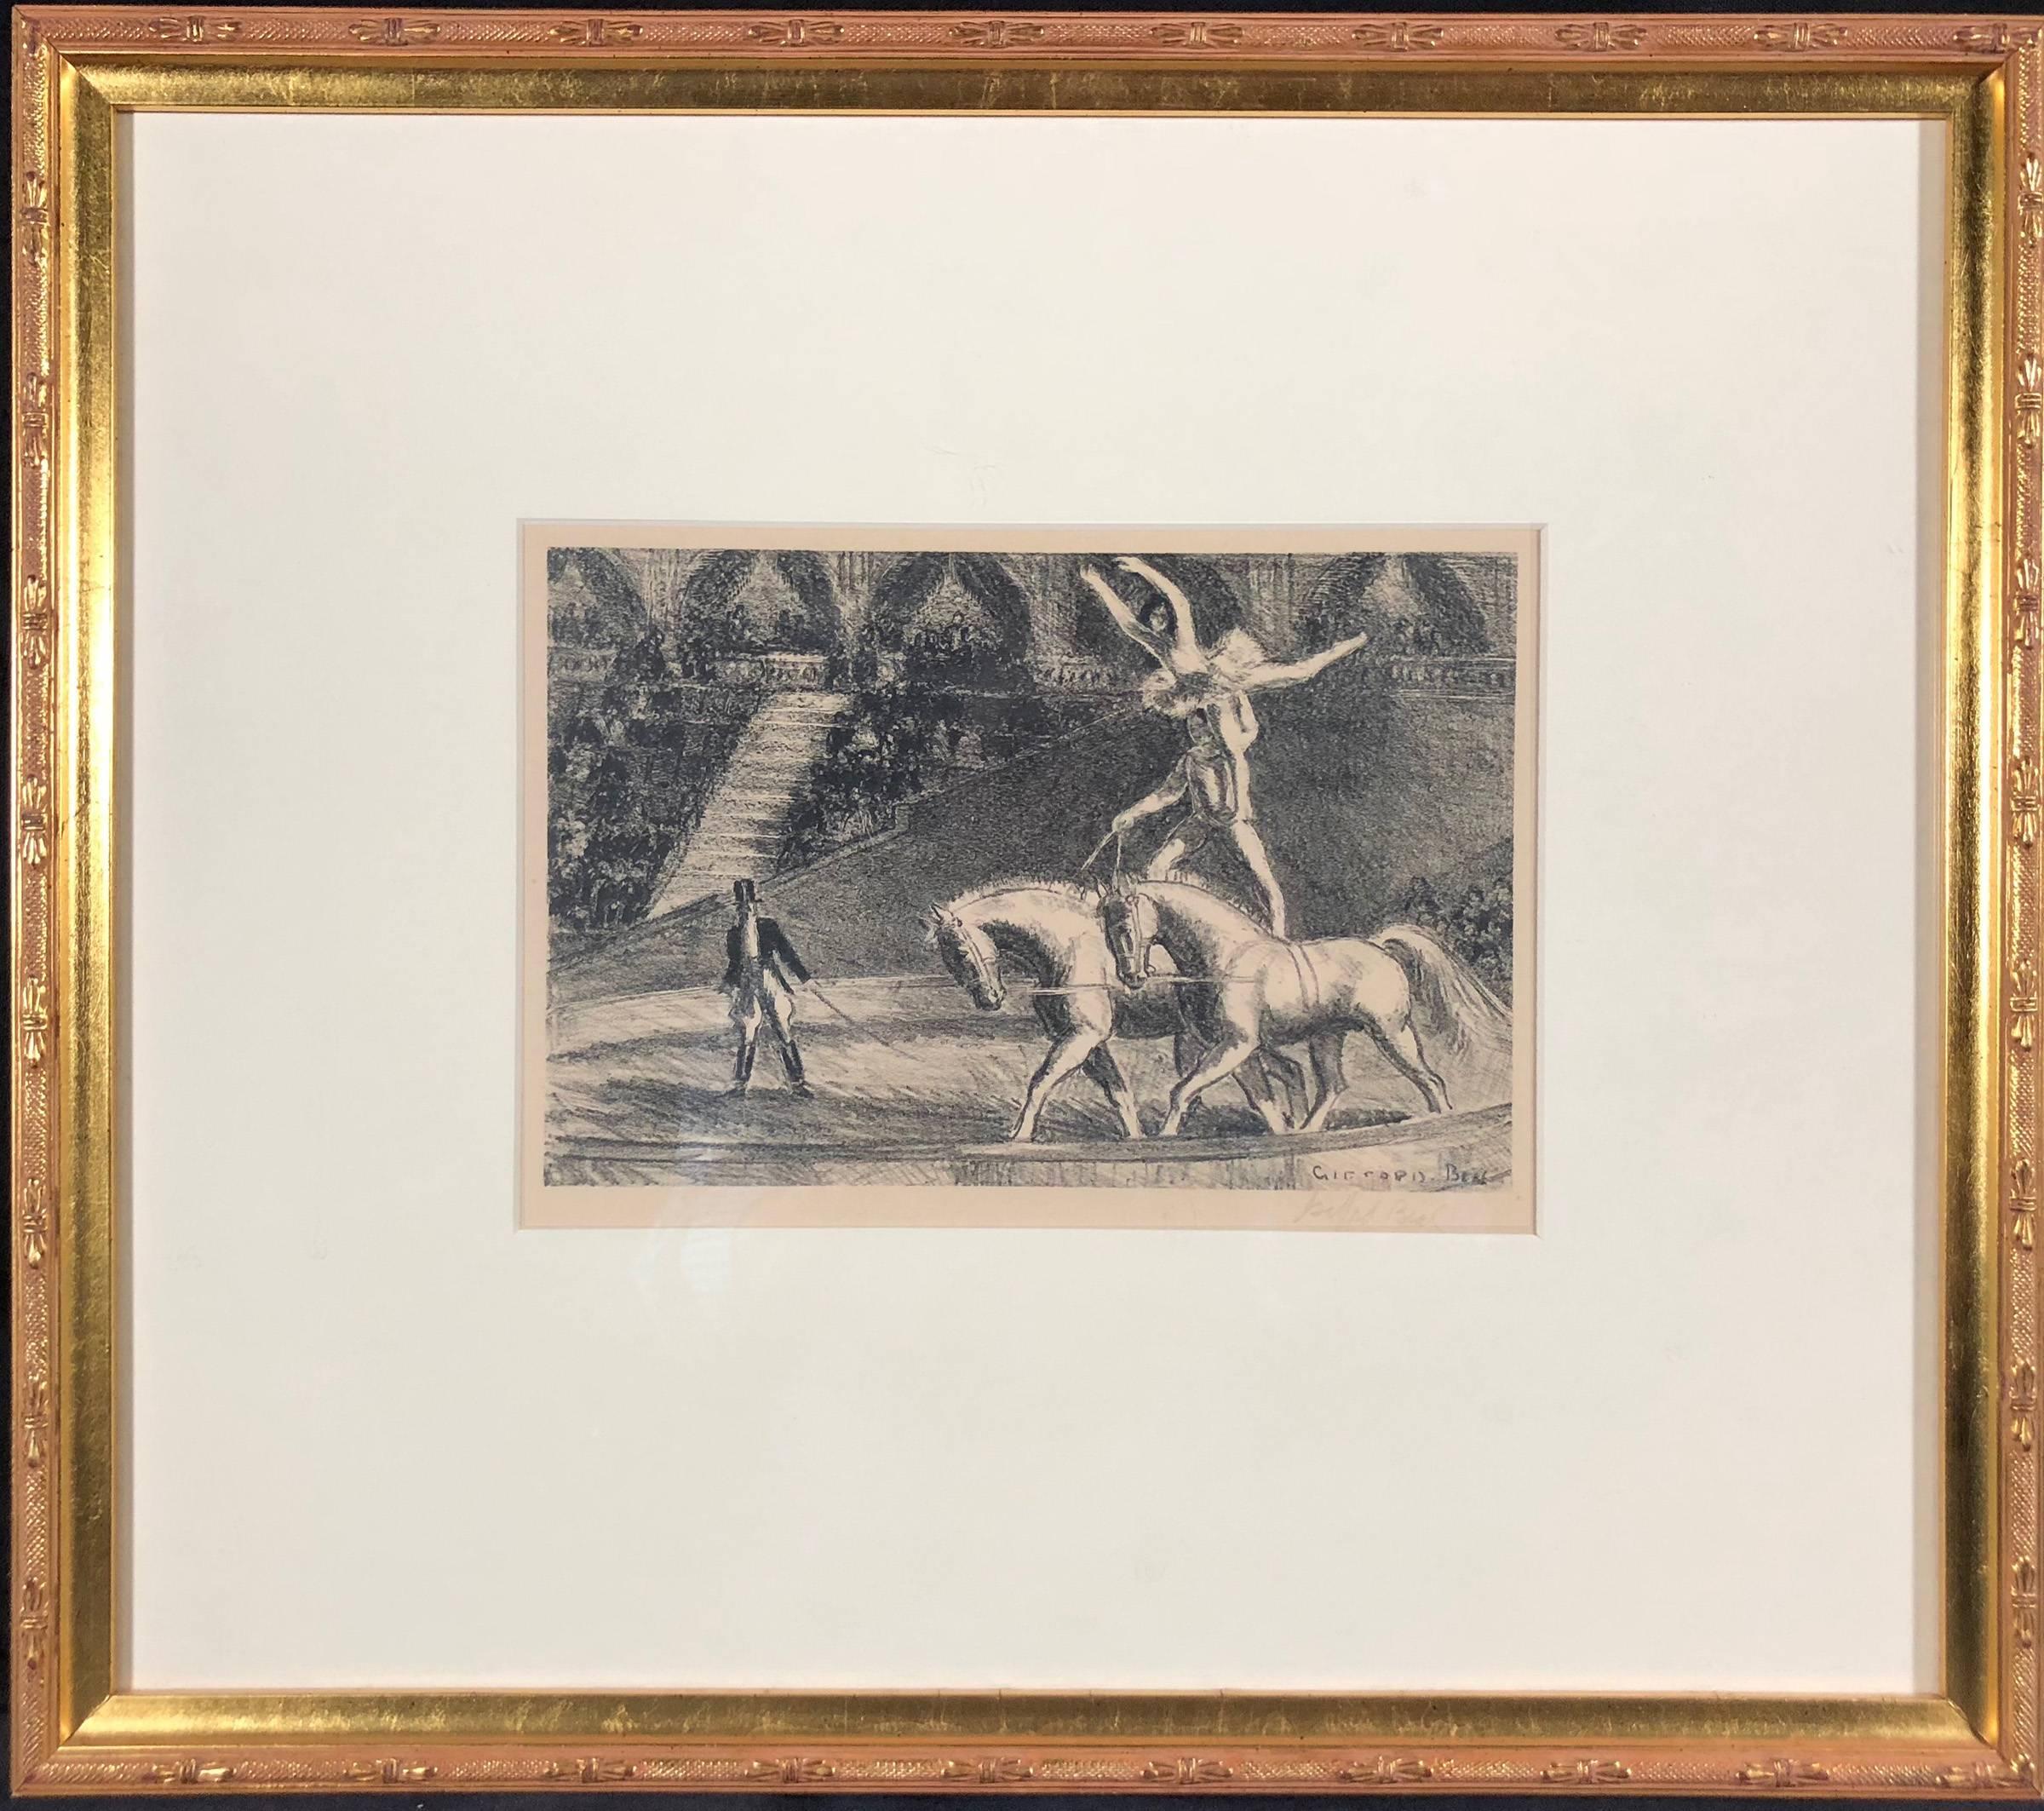 Bareback Act, Old Hippodrome - Print by Gifford Beal